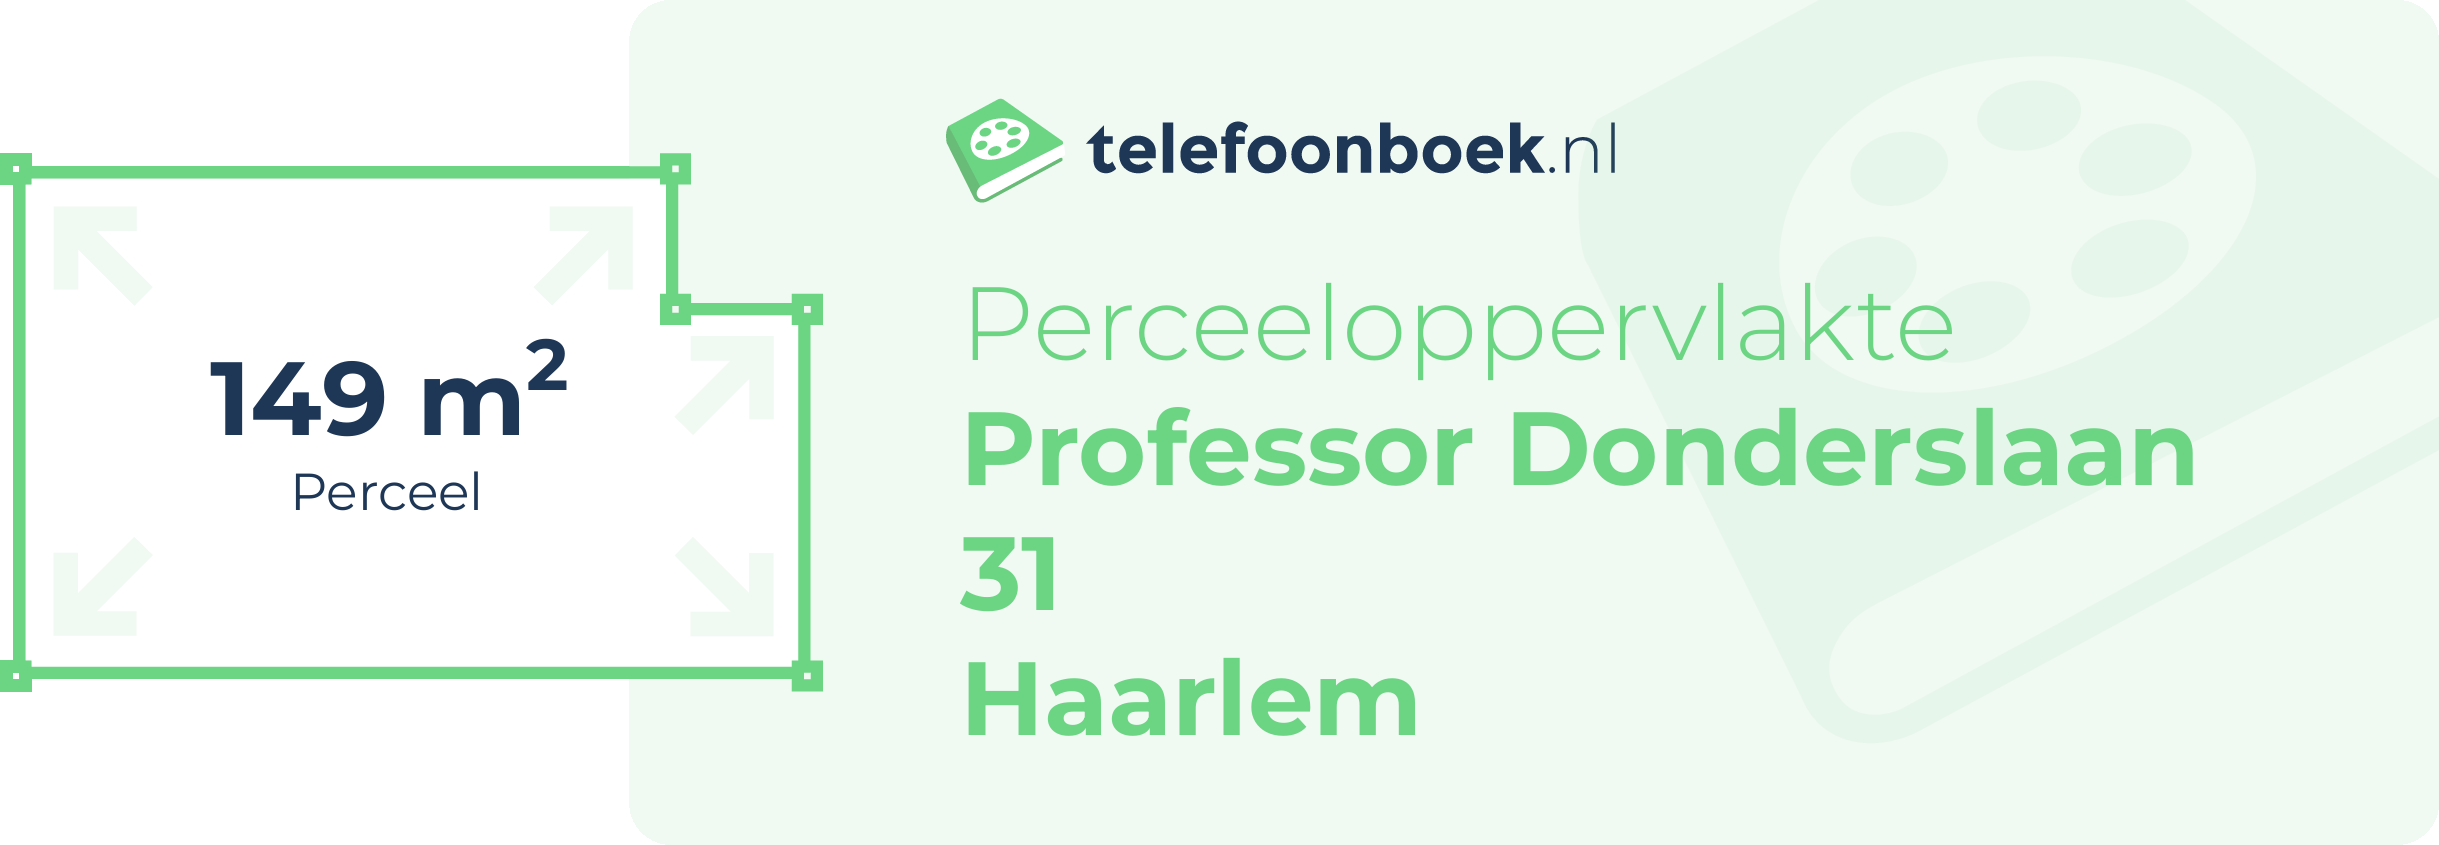 Perceeloppervlakte Professor Donderslaan 31 Haarlem